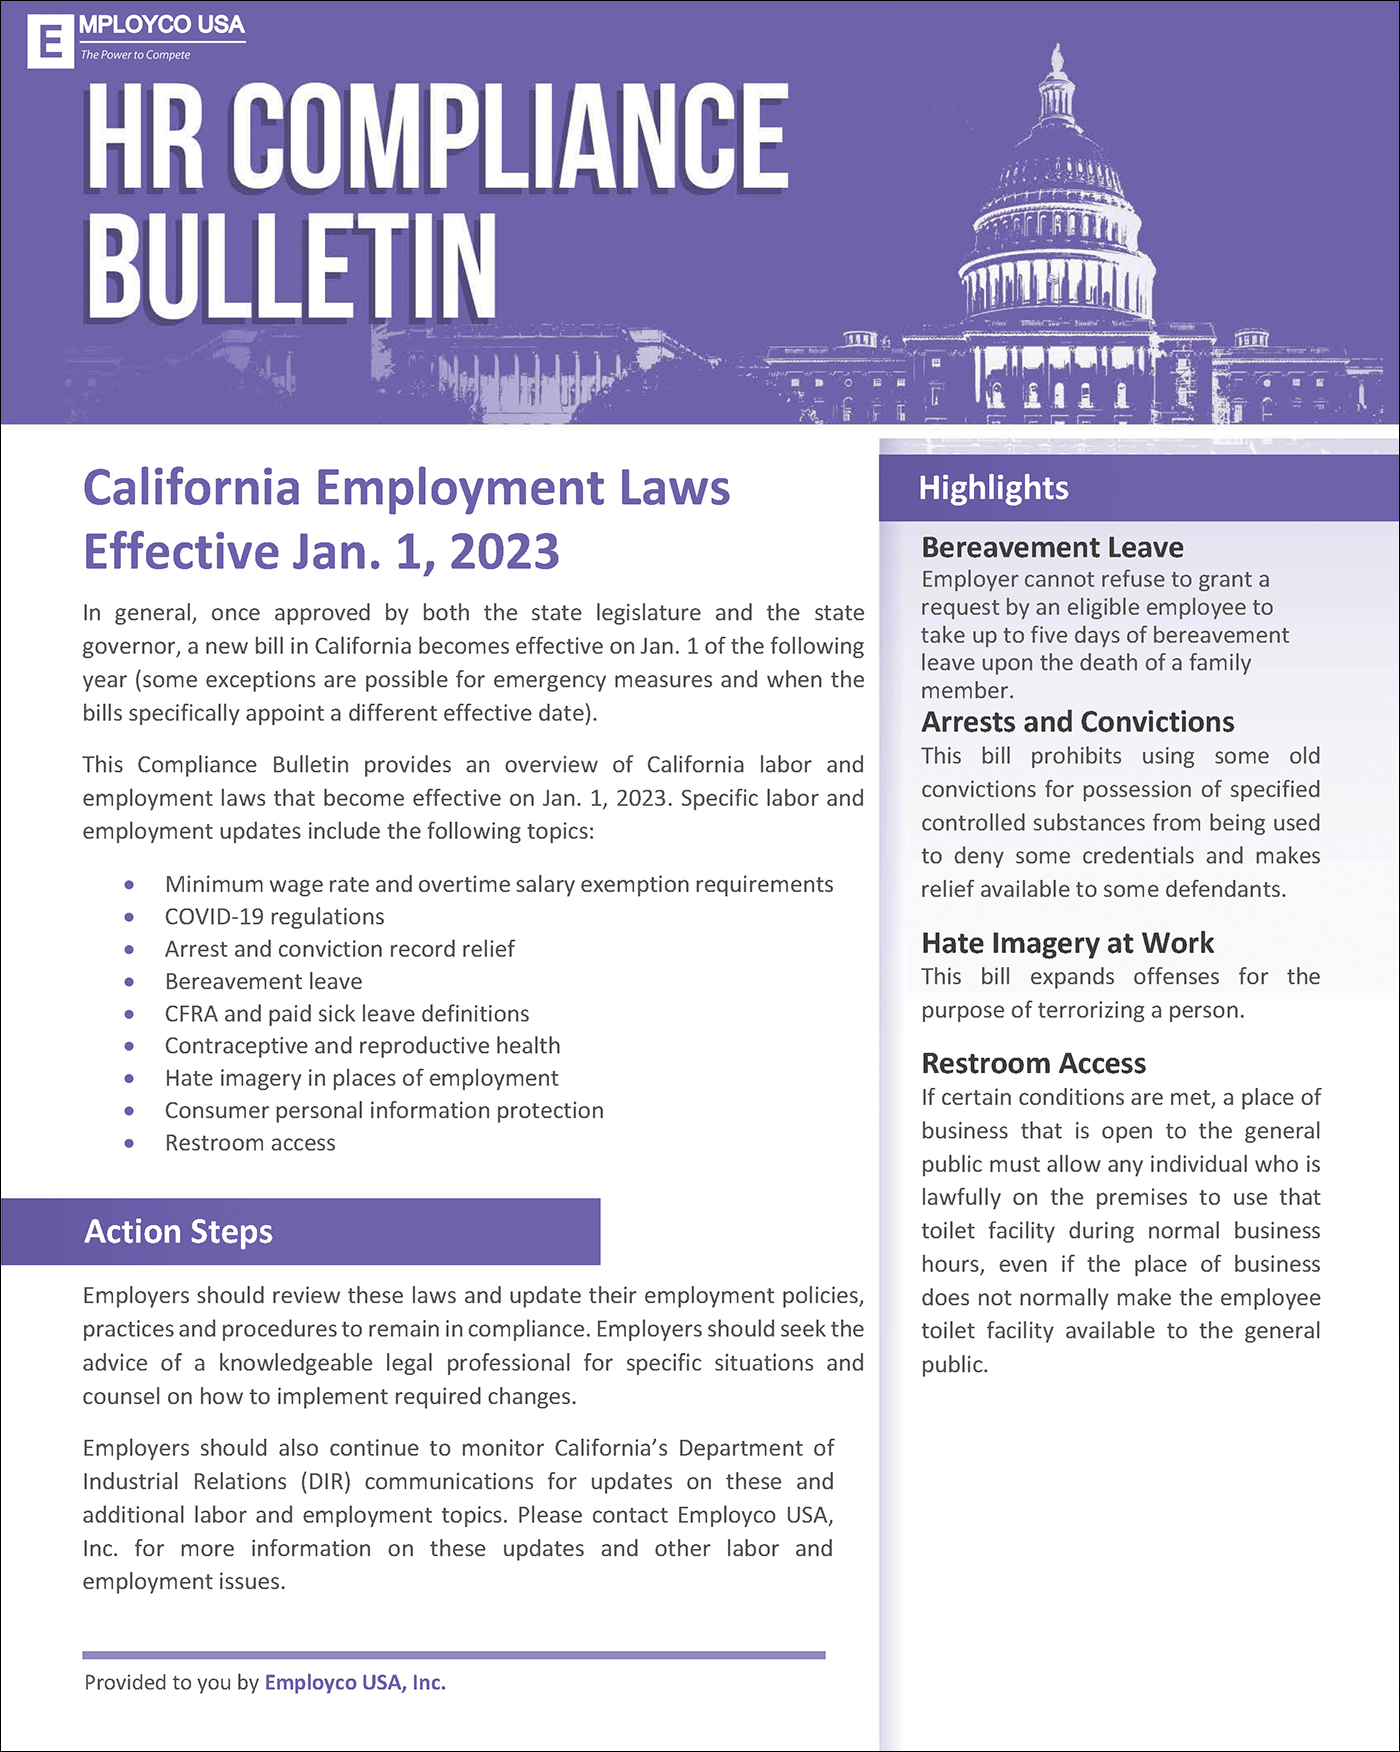 California HR Compliance Bulletin